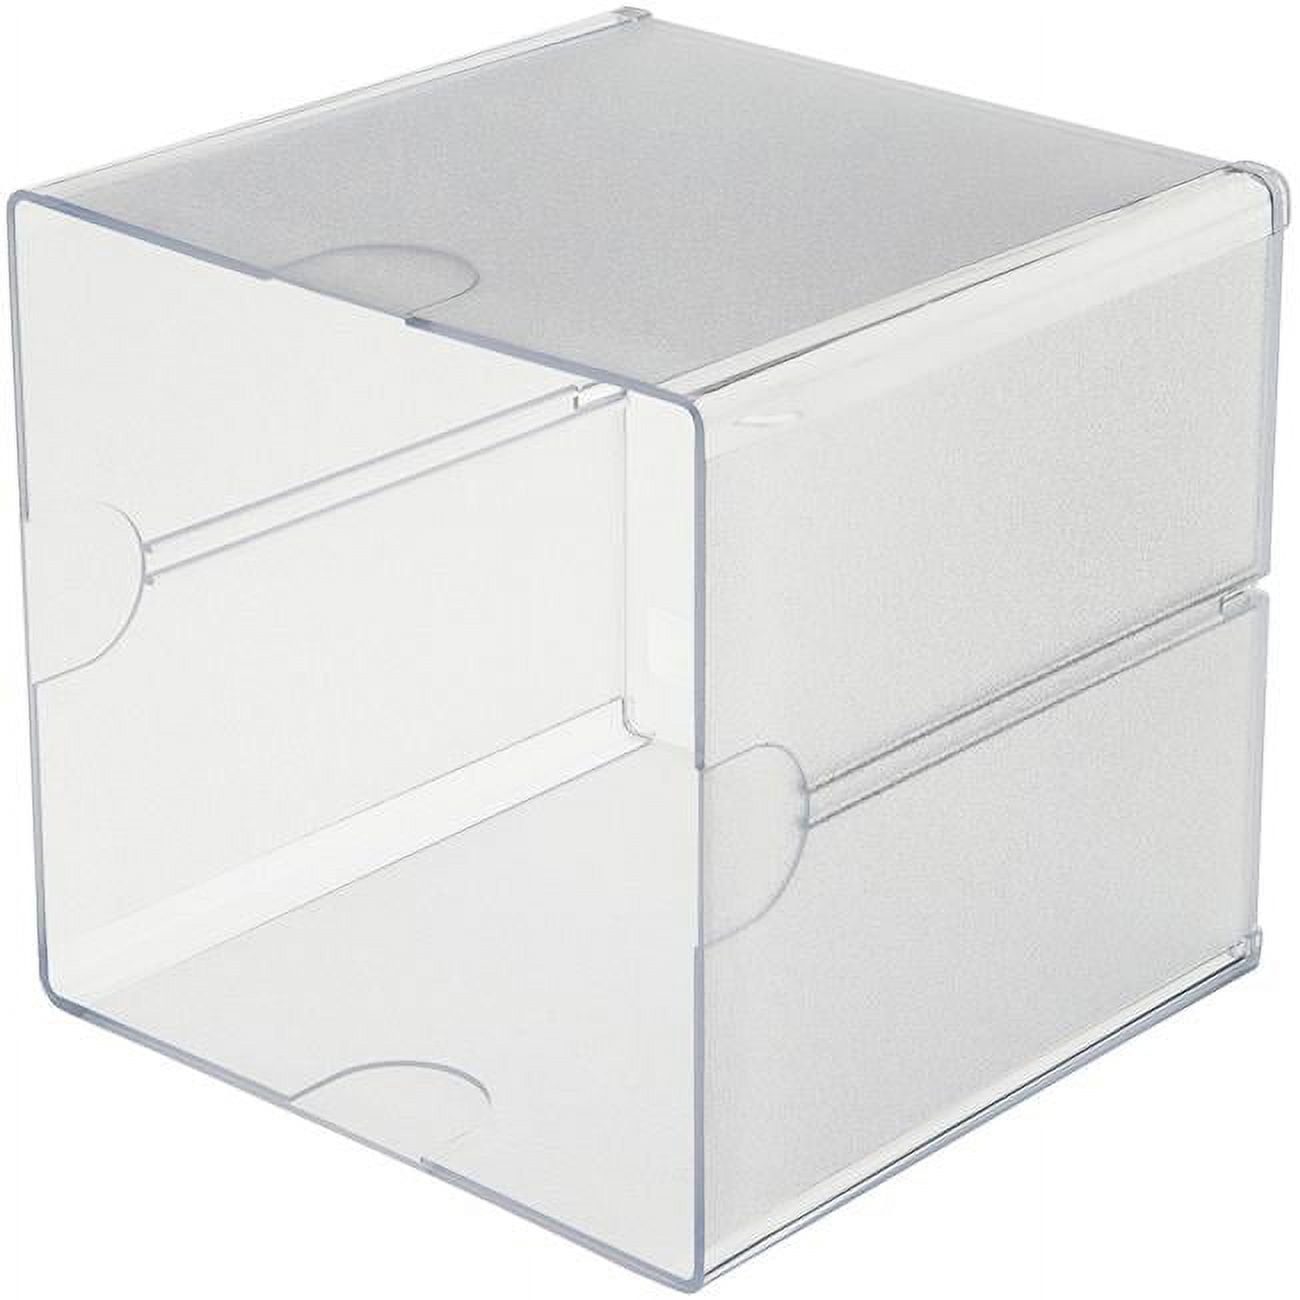 Kraft Memory Box by Simply Tidy - Store and Organize Photos